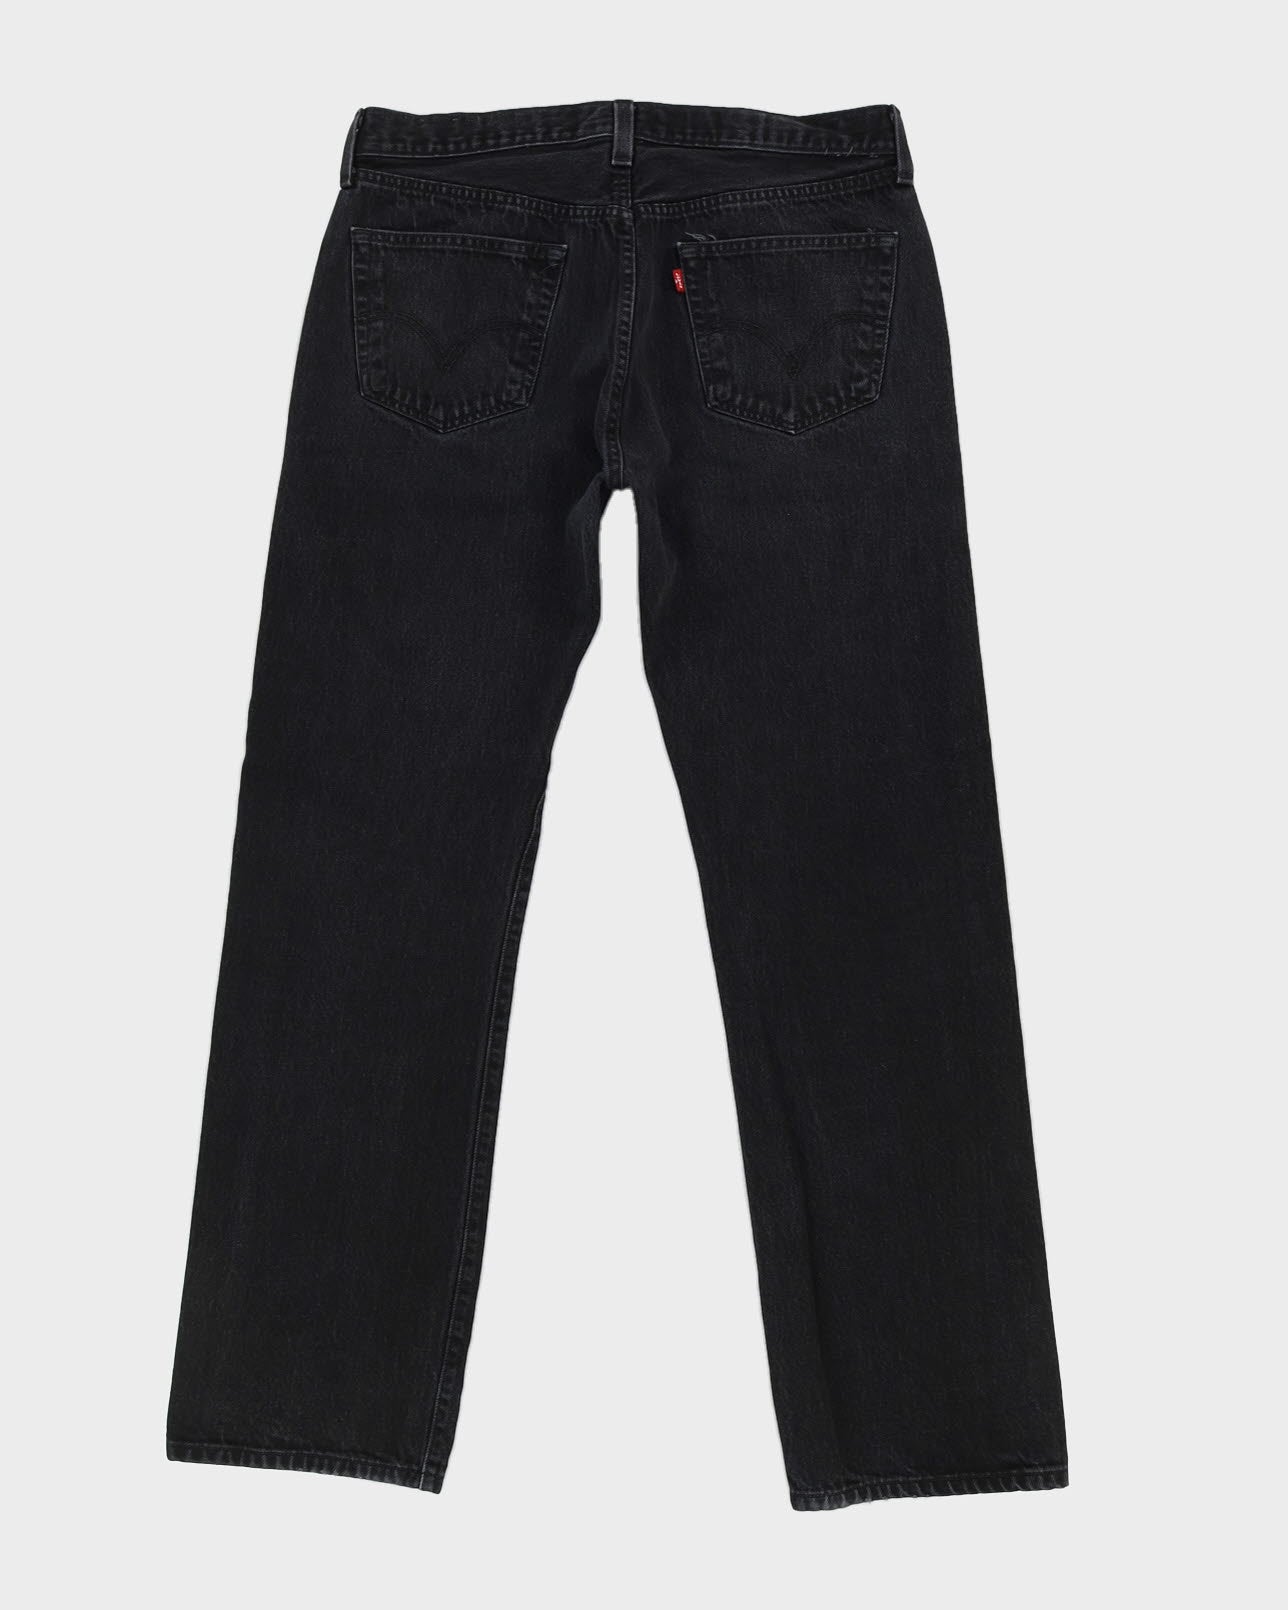 Levi's 501 Black Jeans